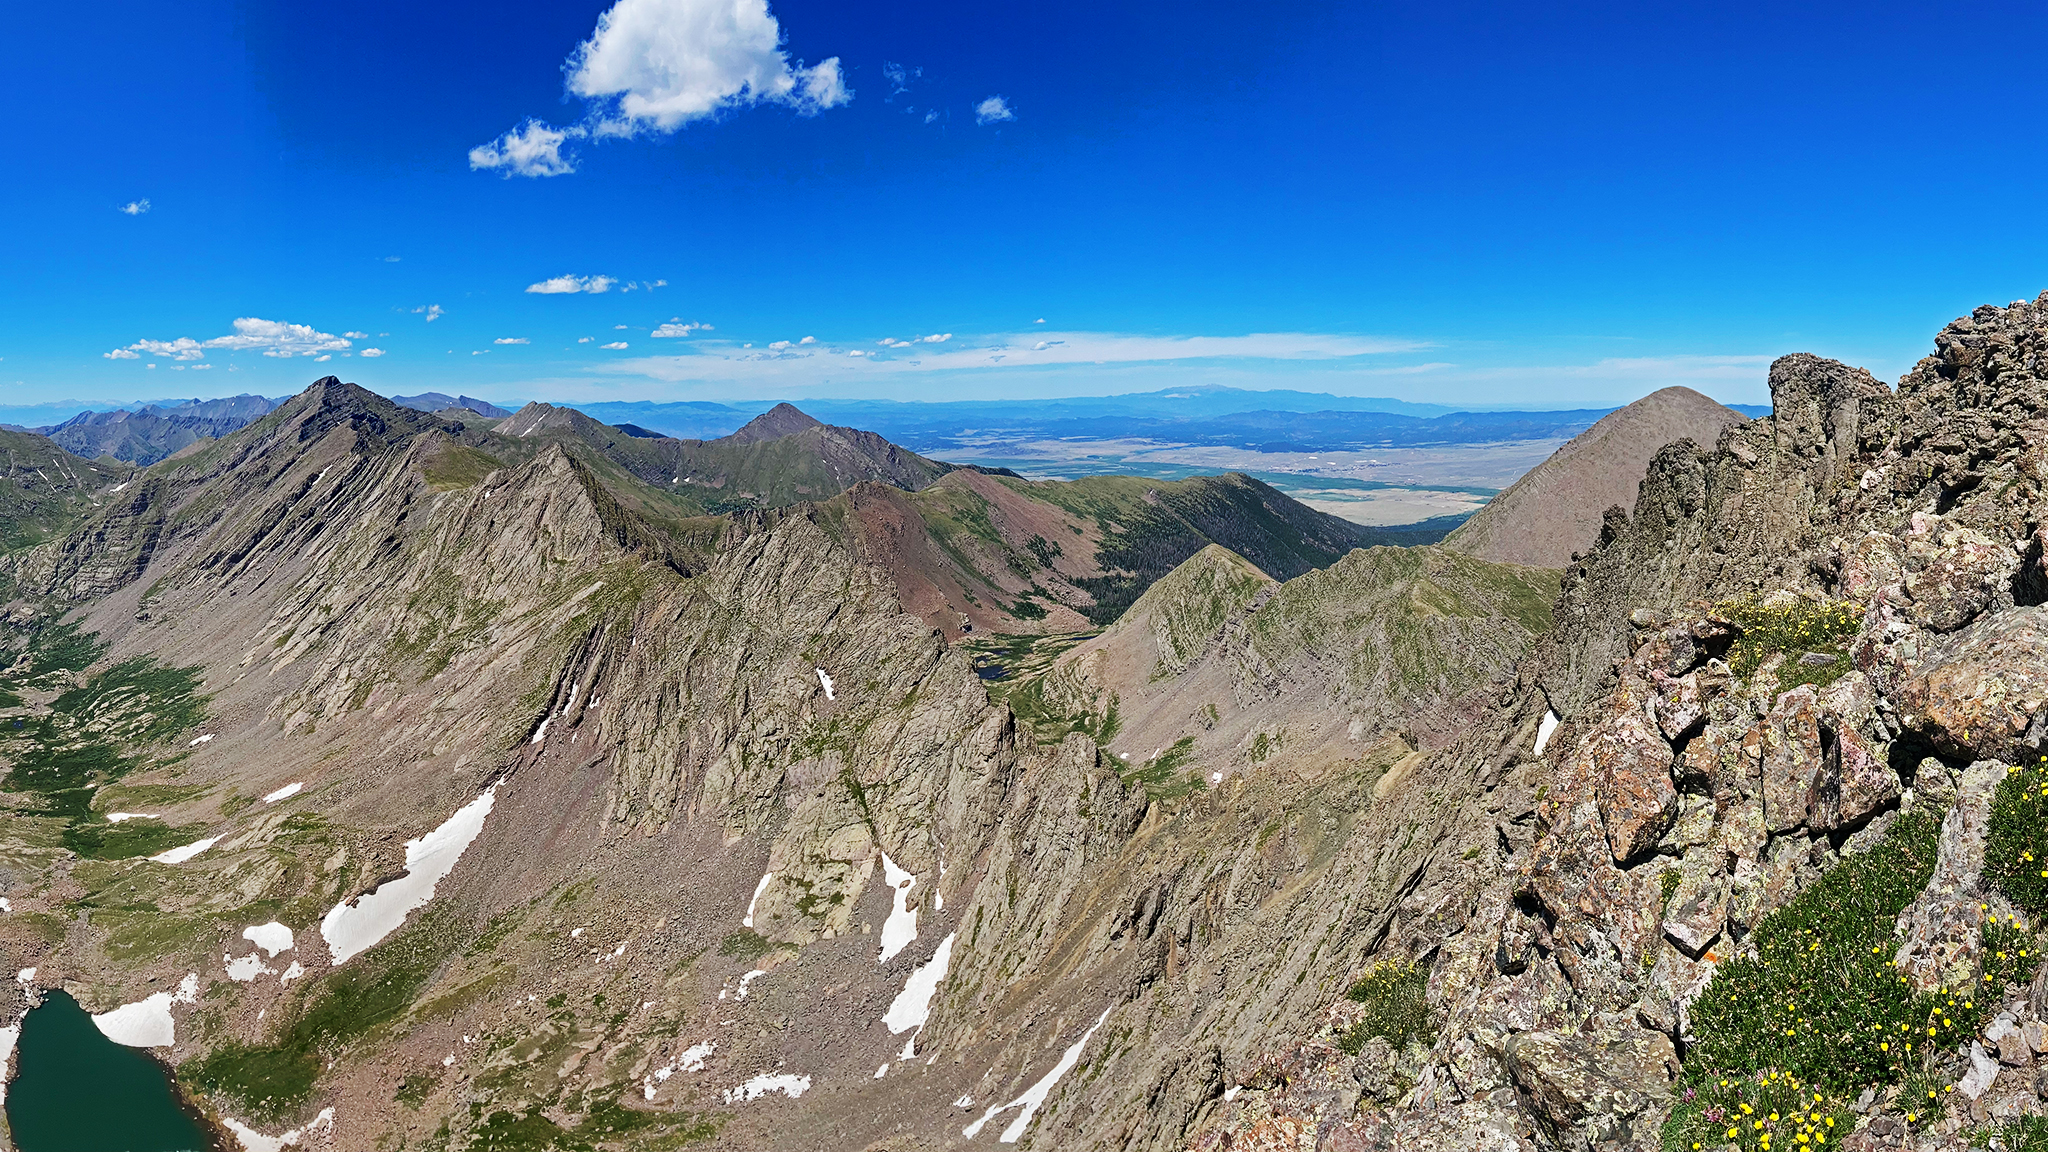 The incredible ridgeline between Mt. Adams and Obstruction Peak